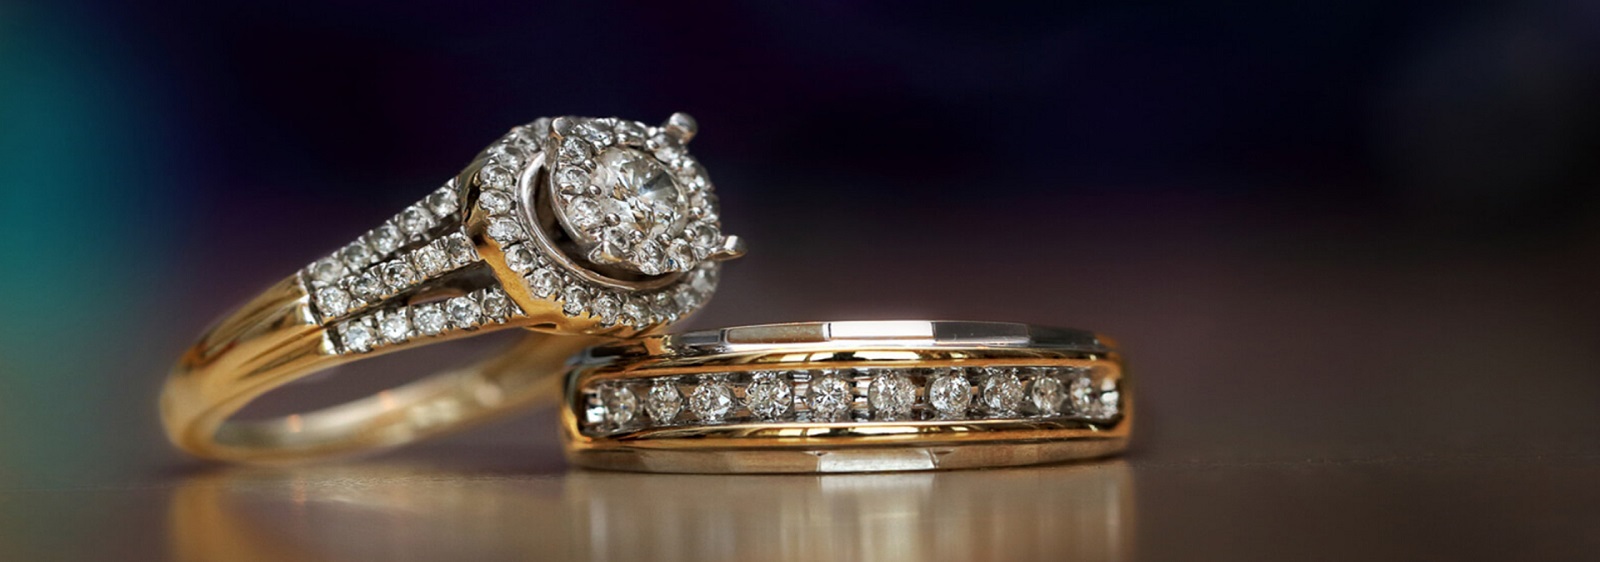 Fine Jewellery studded with Gems and Diamonds